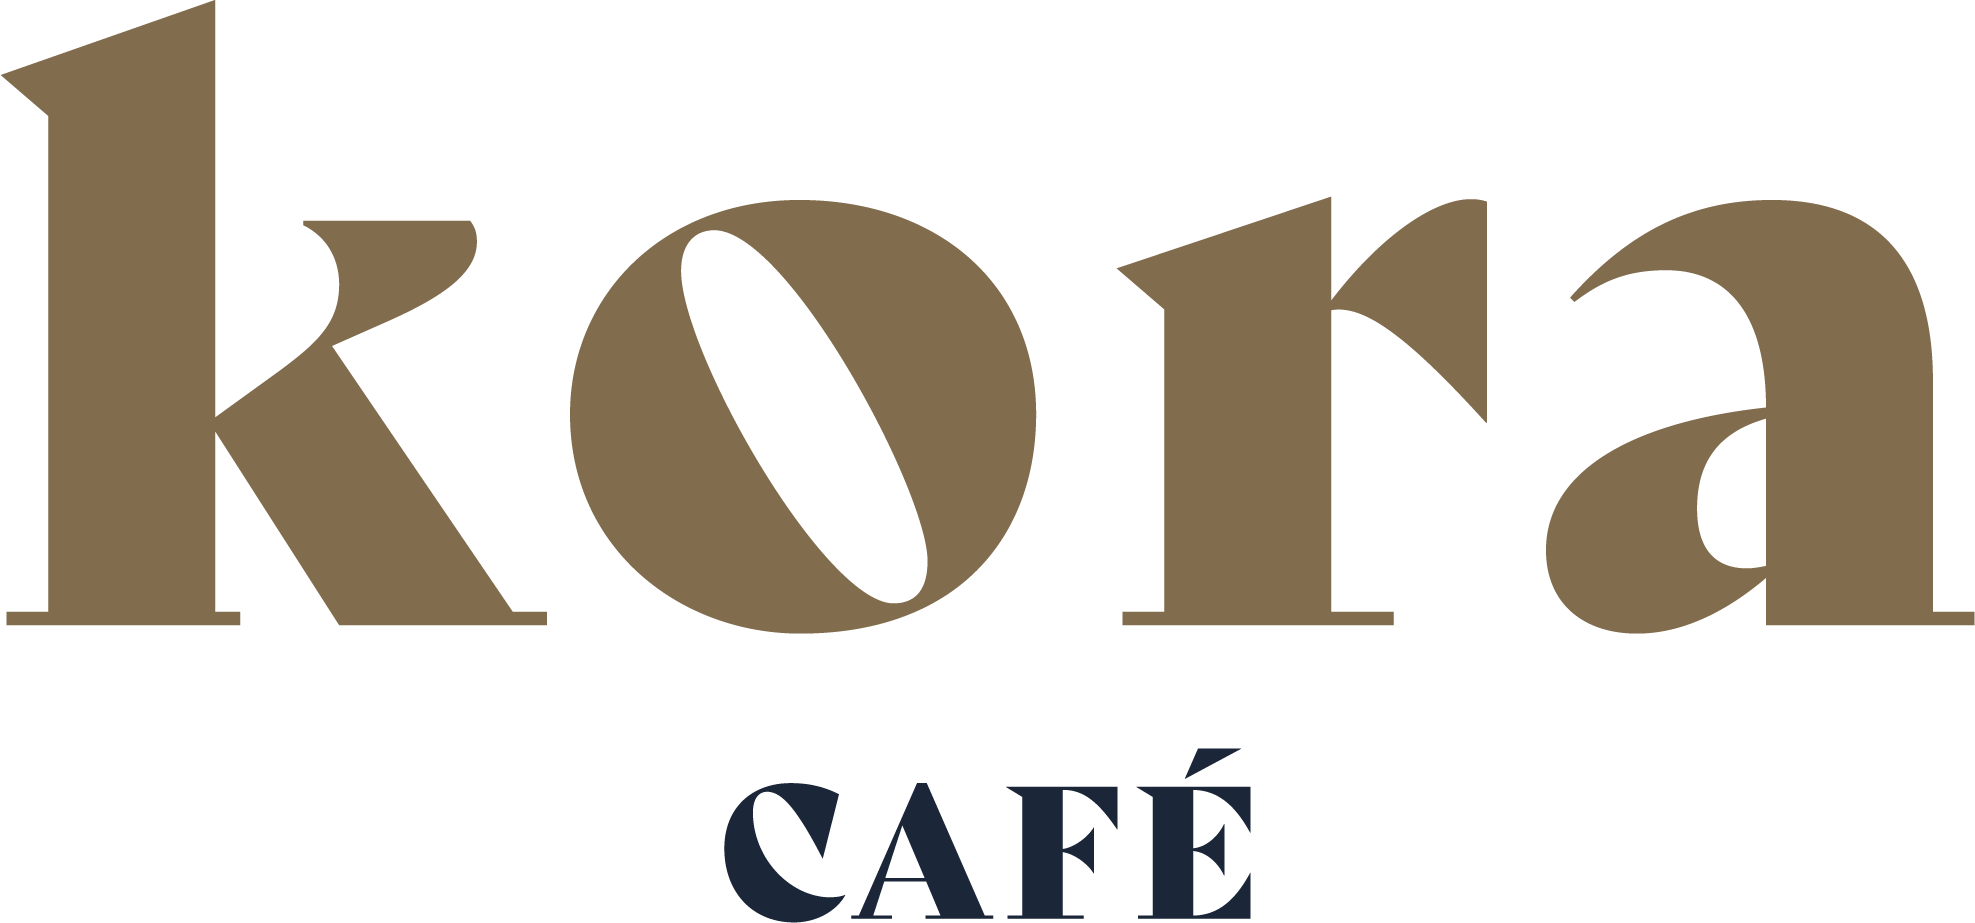 Kora Cafe